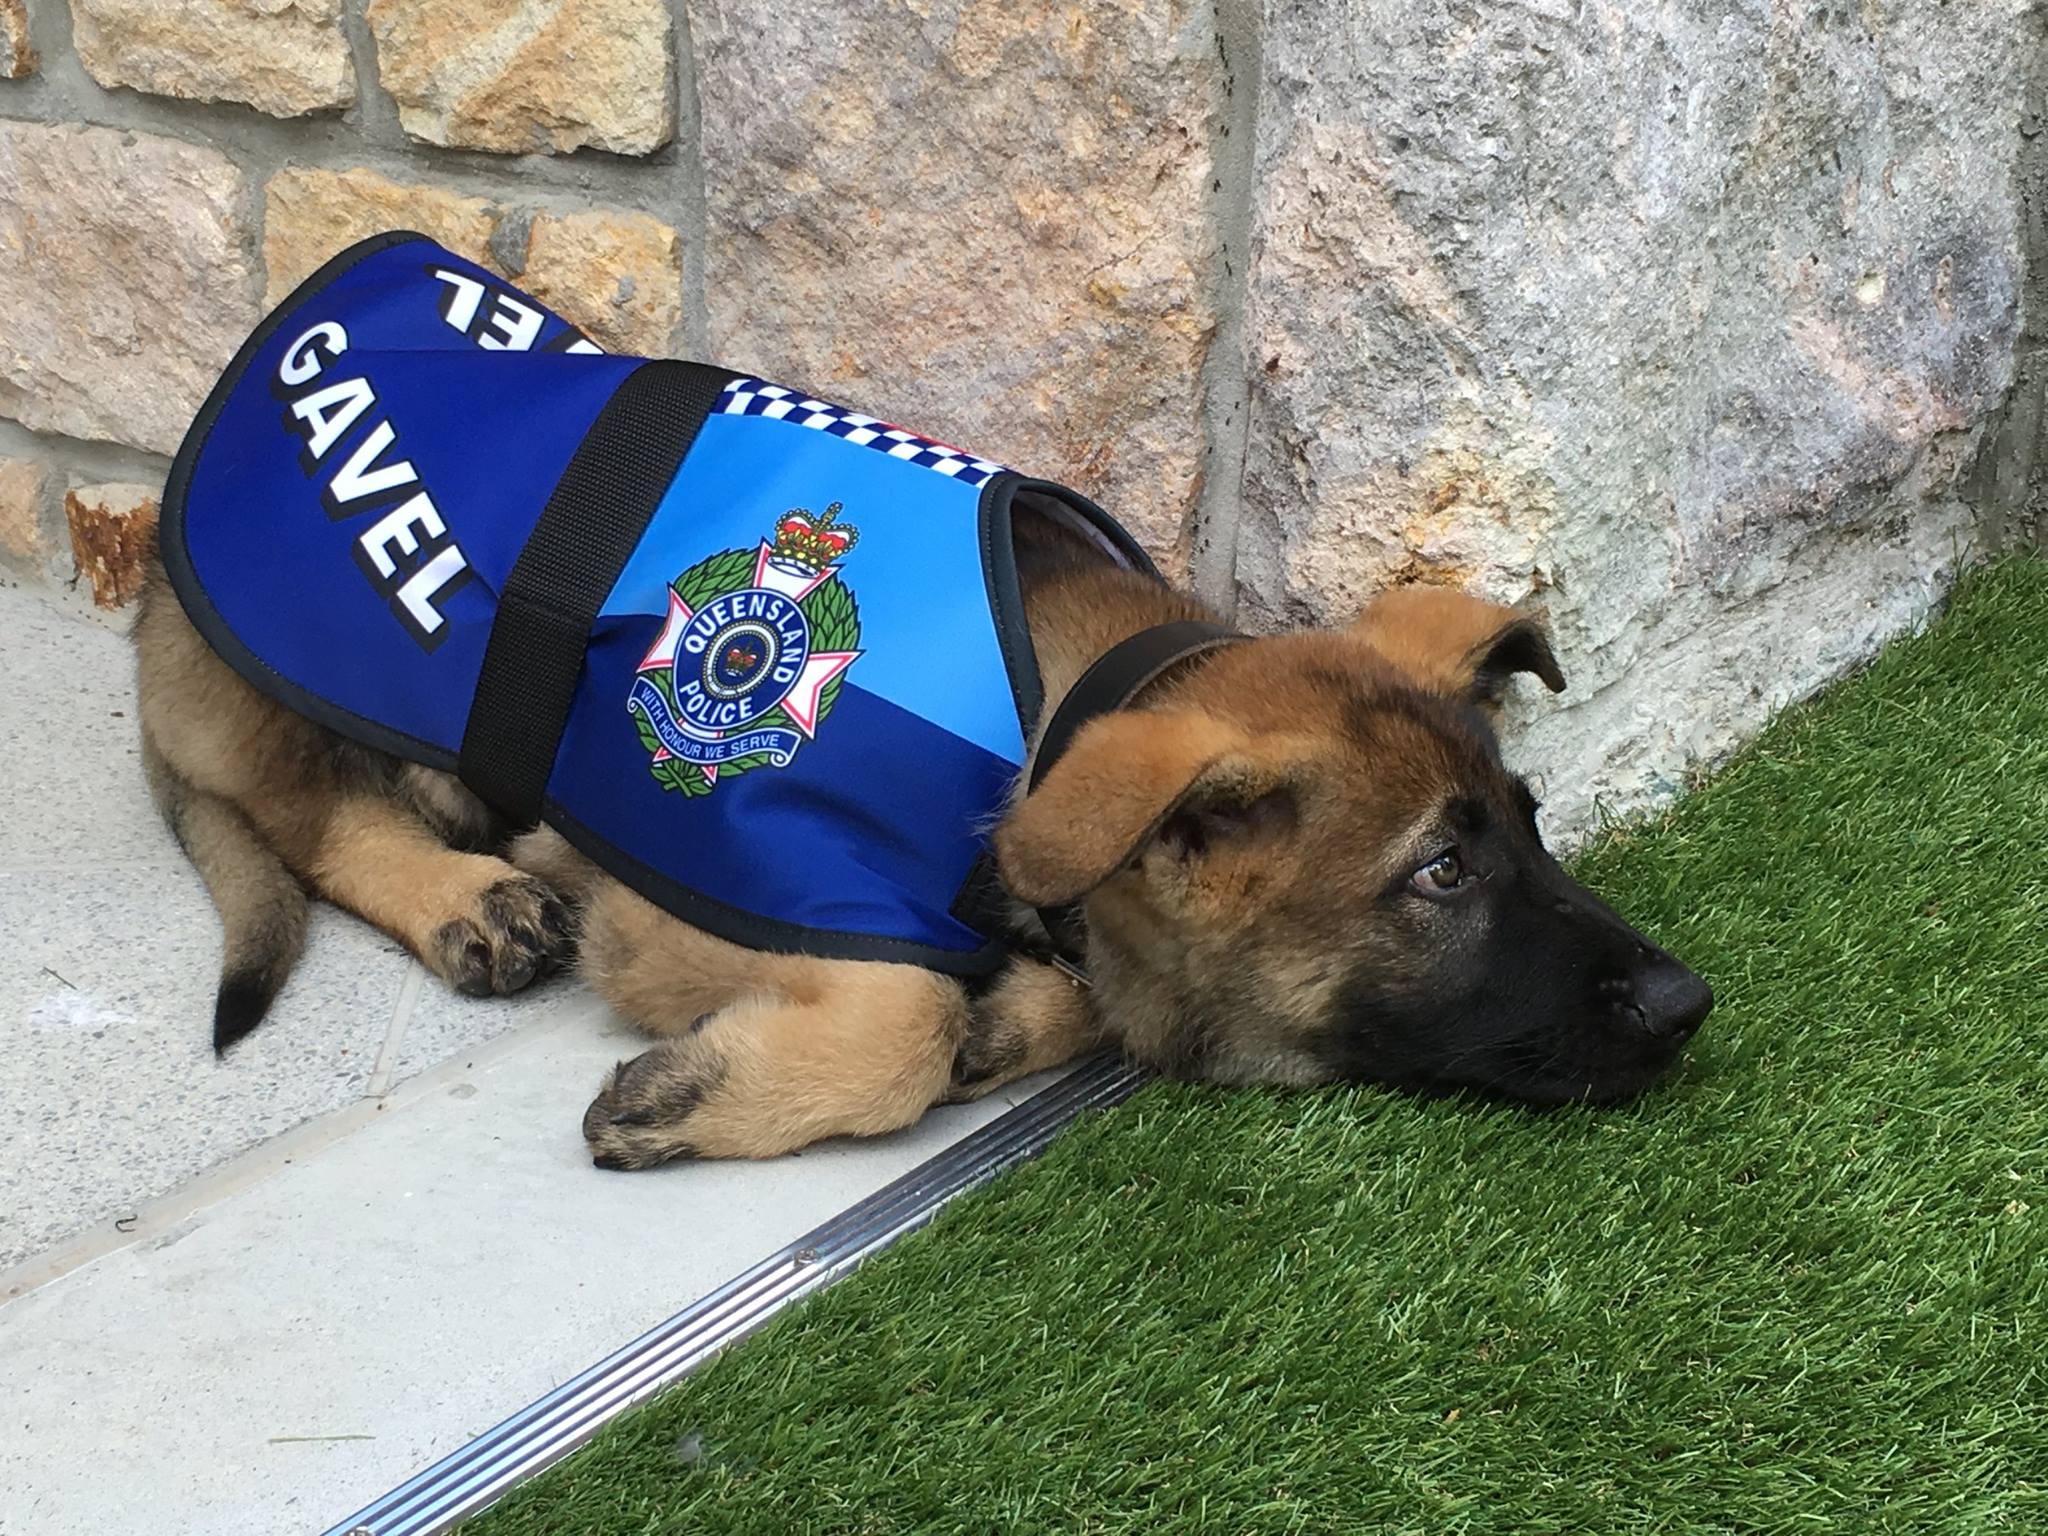 Gavel, K9, police dog, vice-regal dog